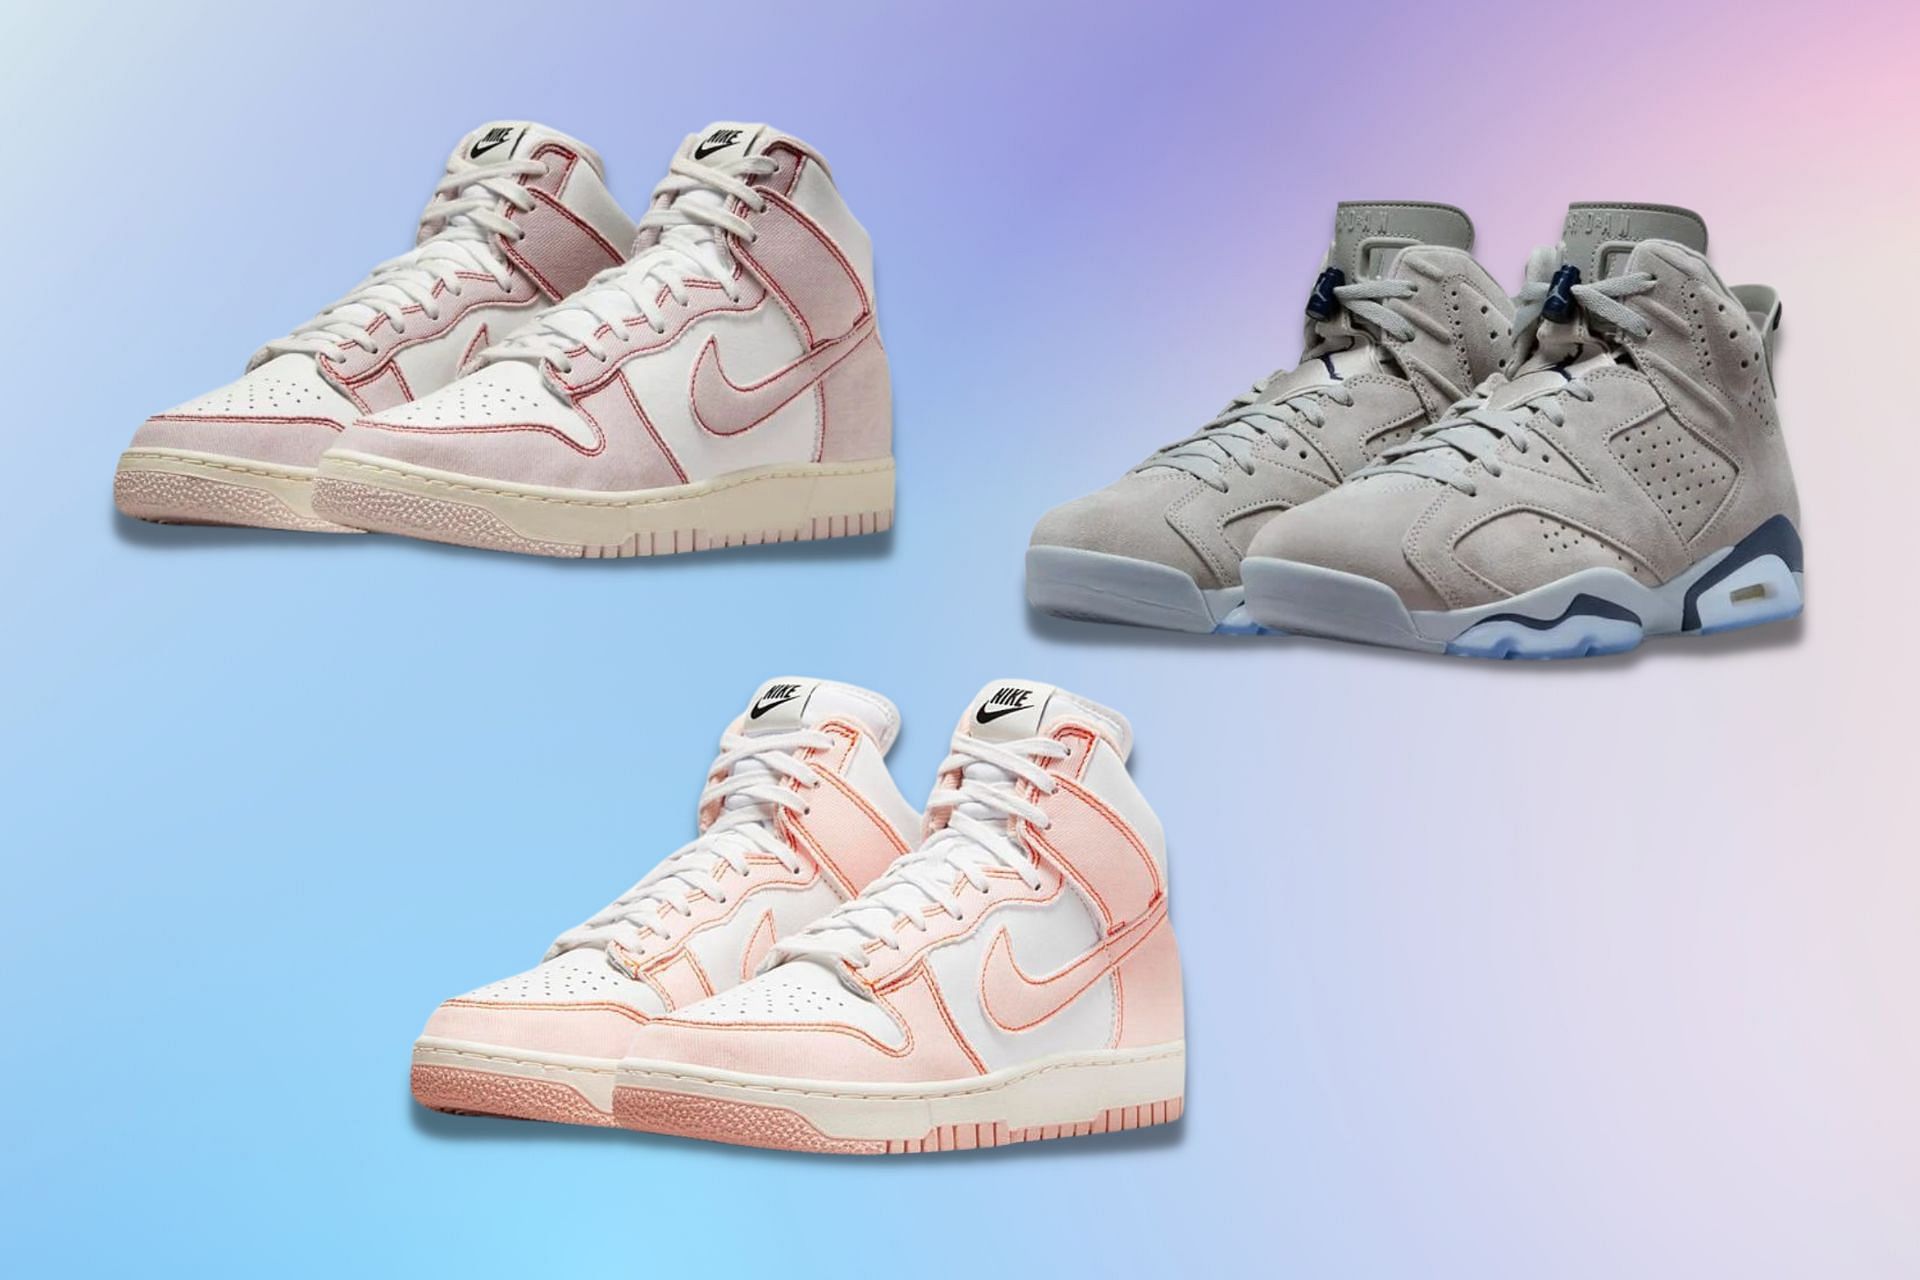 Three forthcoming September 2022 sneaker releases by Nike (Image via Sportskeeda)